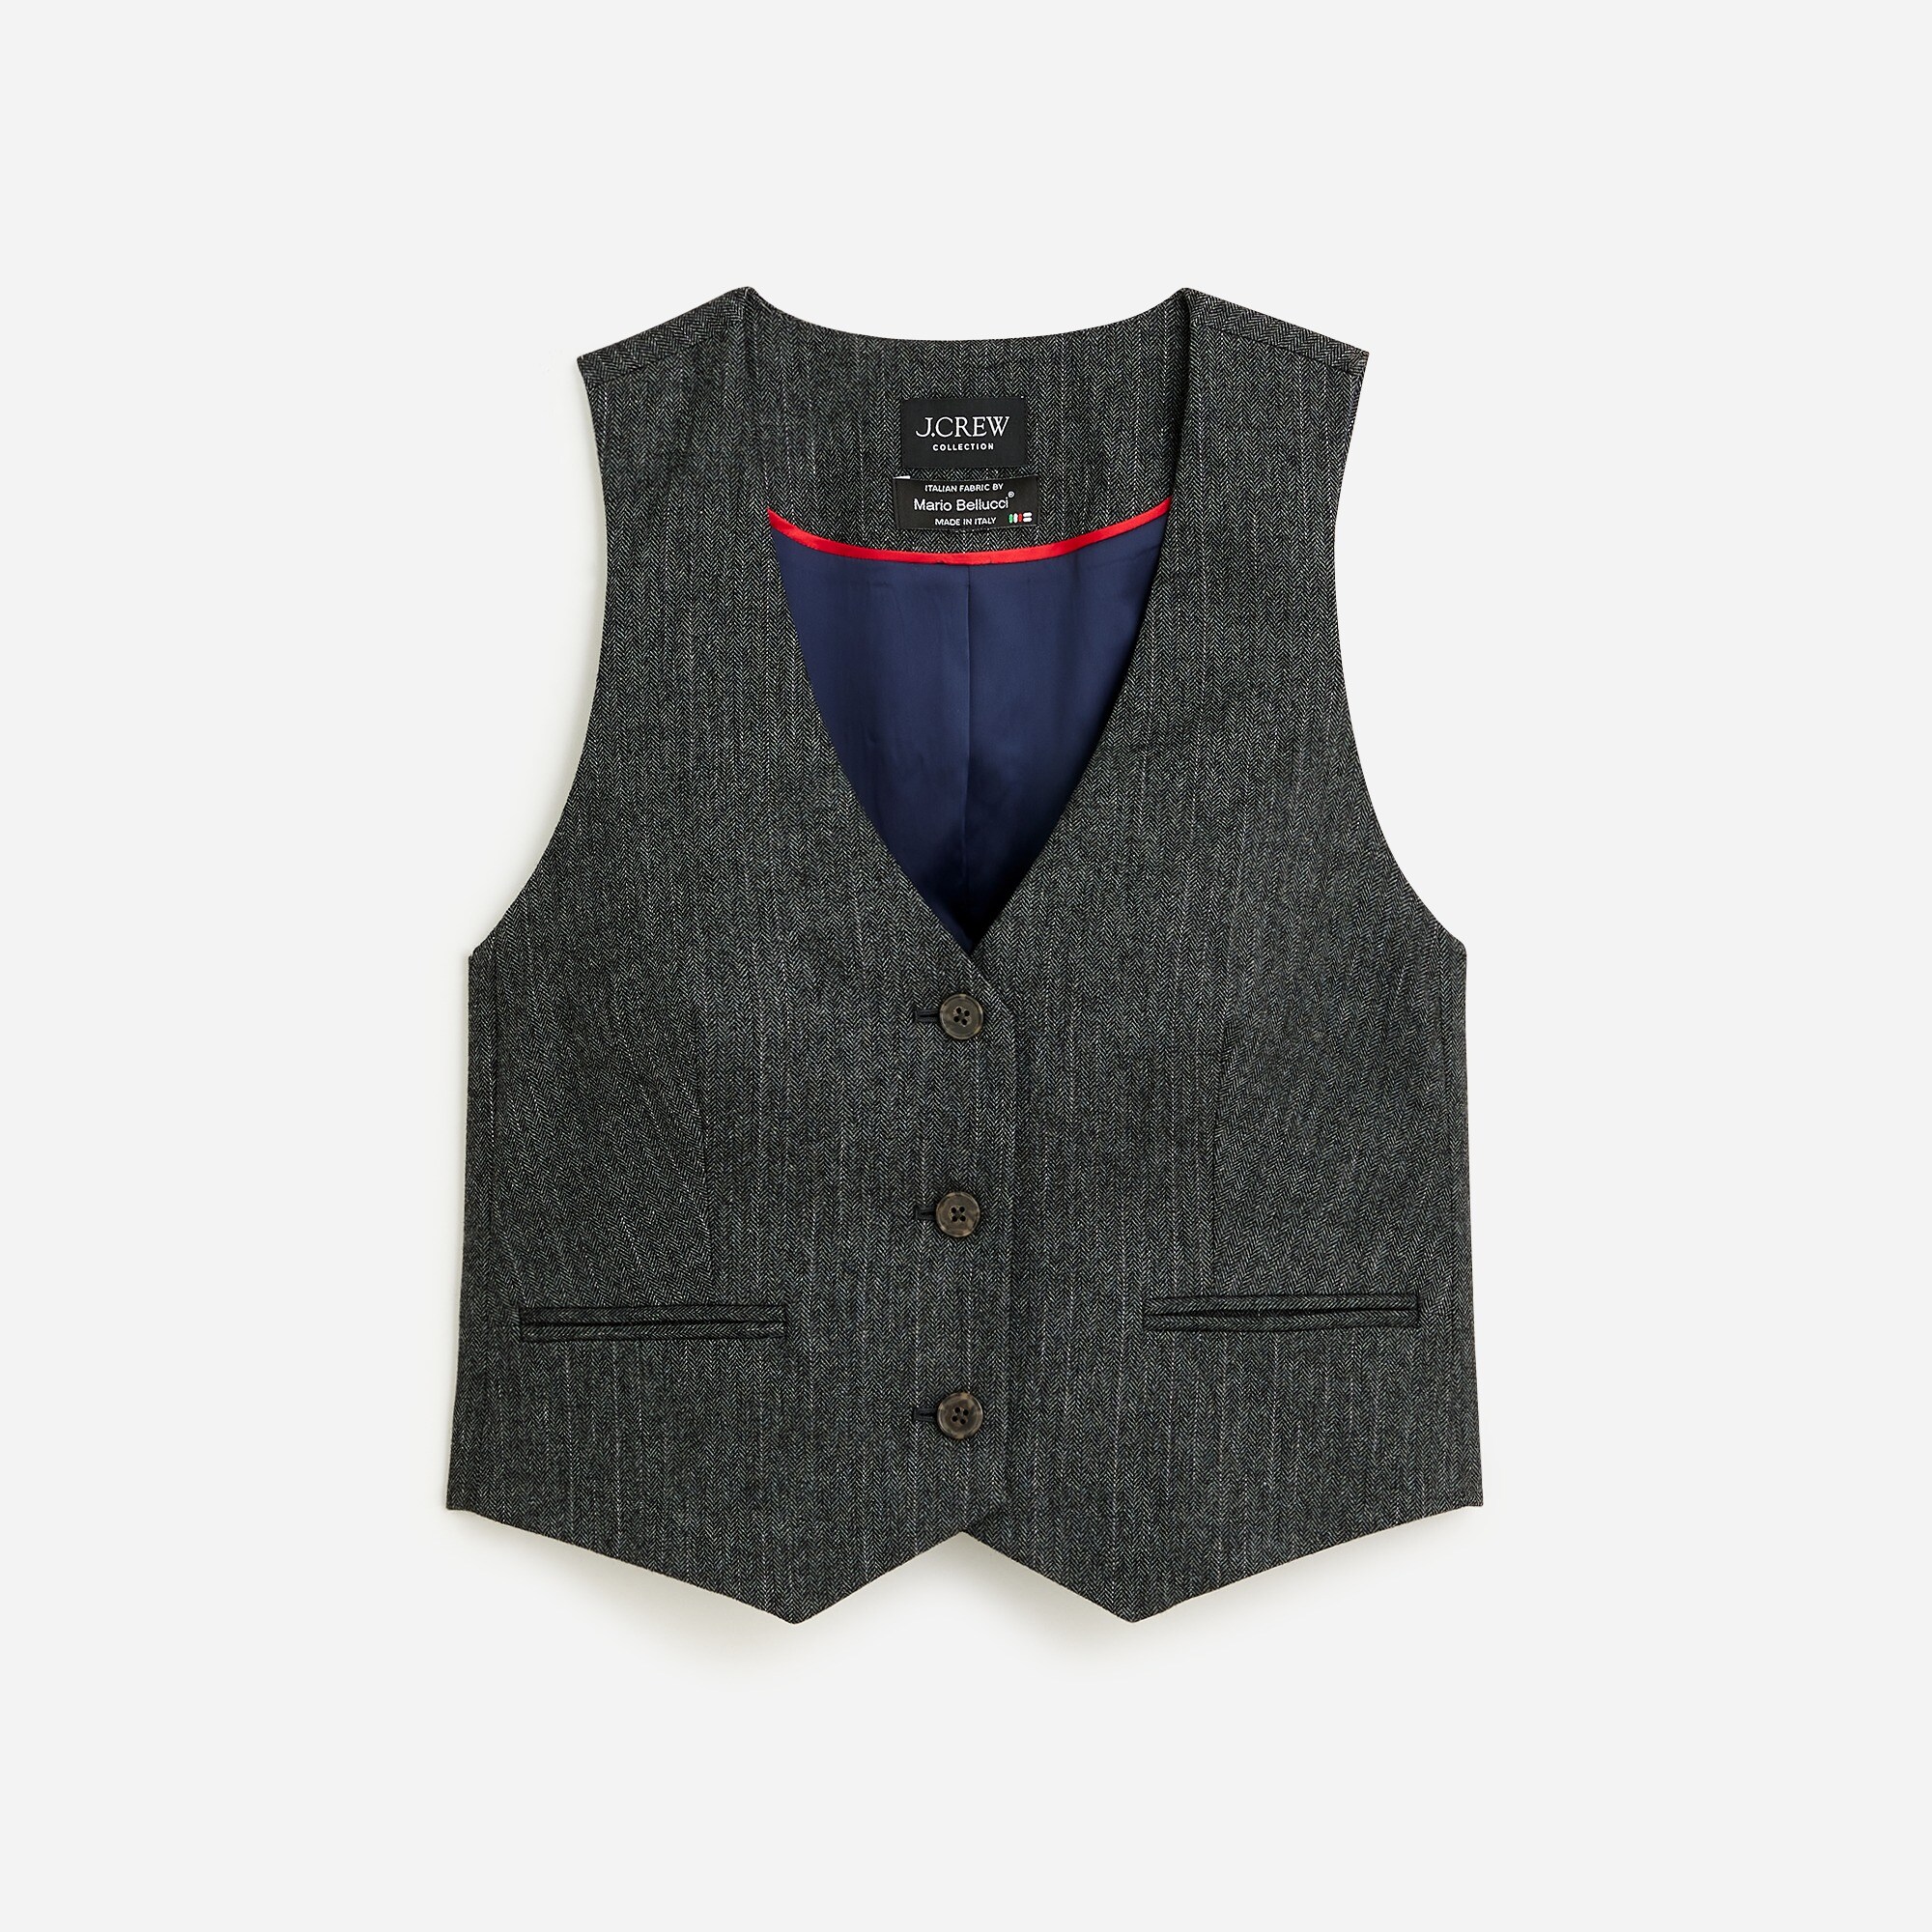  Collection cropped vest in Italian pinstripe wool blend with Lurex&reg; metallic threads